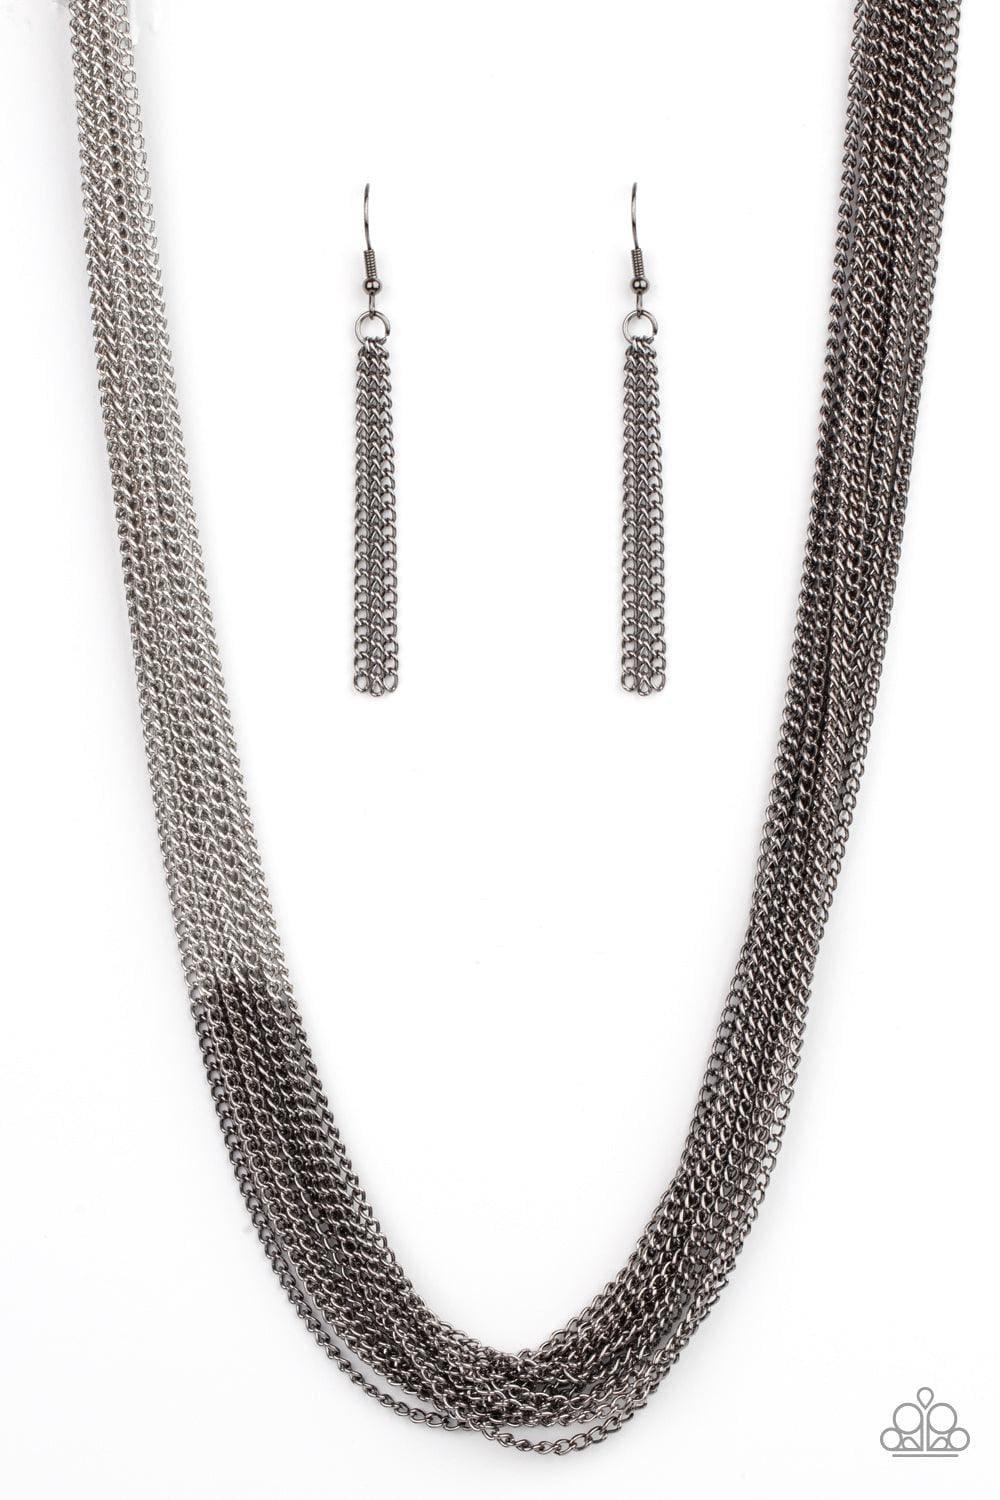 Paparazzi Accessories - Metallic Merger - Black Necklace - Bling by JessieK